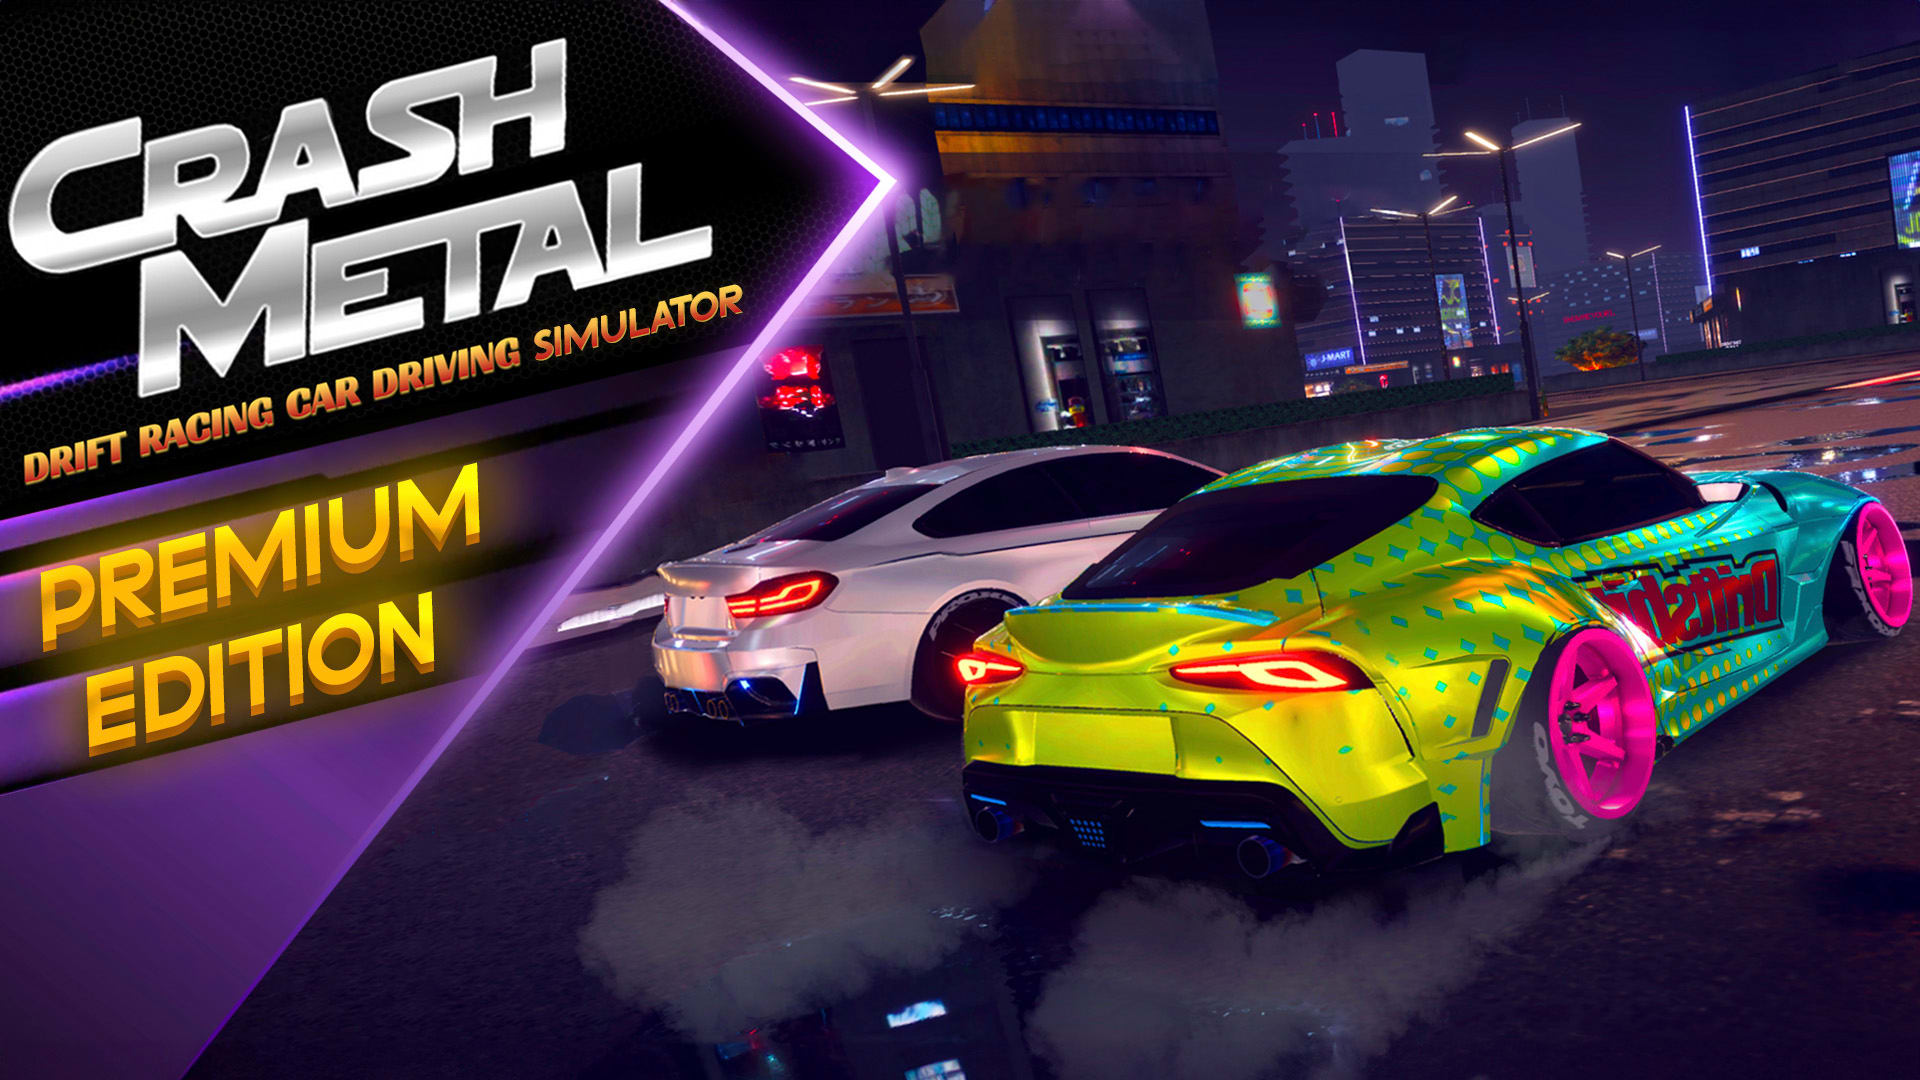 CrashMetal - Drift Racing Car Driving Simulator - PREMIUM EDITION 1